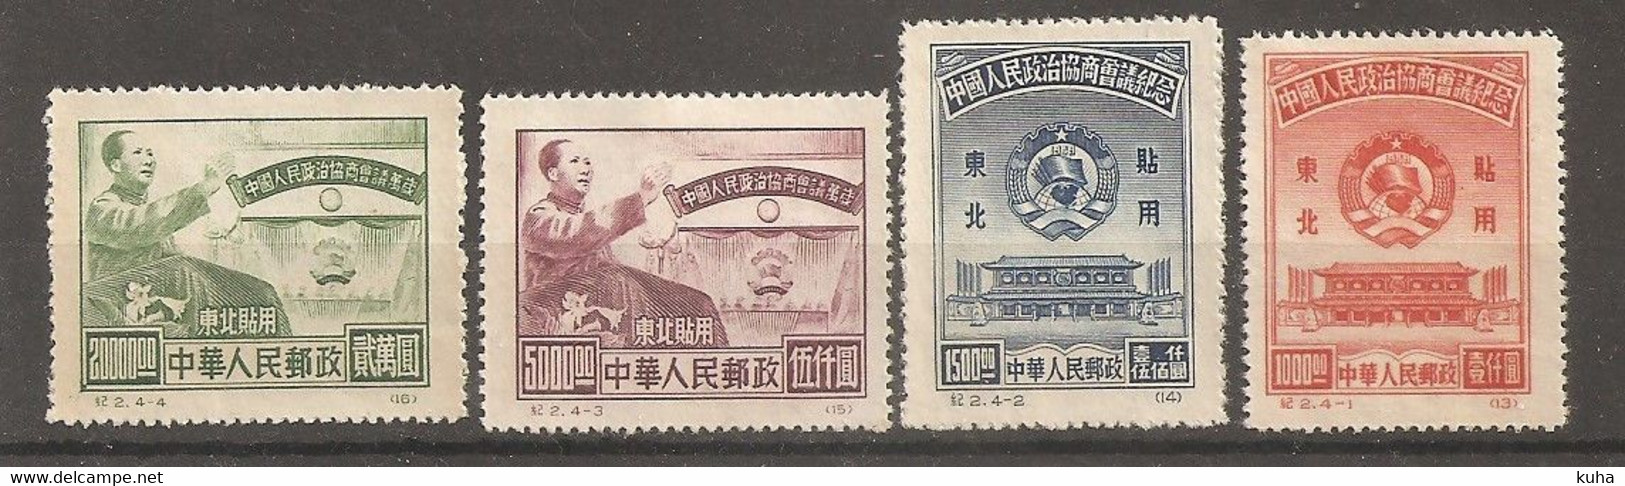 China Chine 1950 North China MNH - Northern China 1949-50